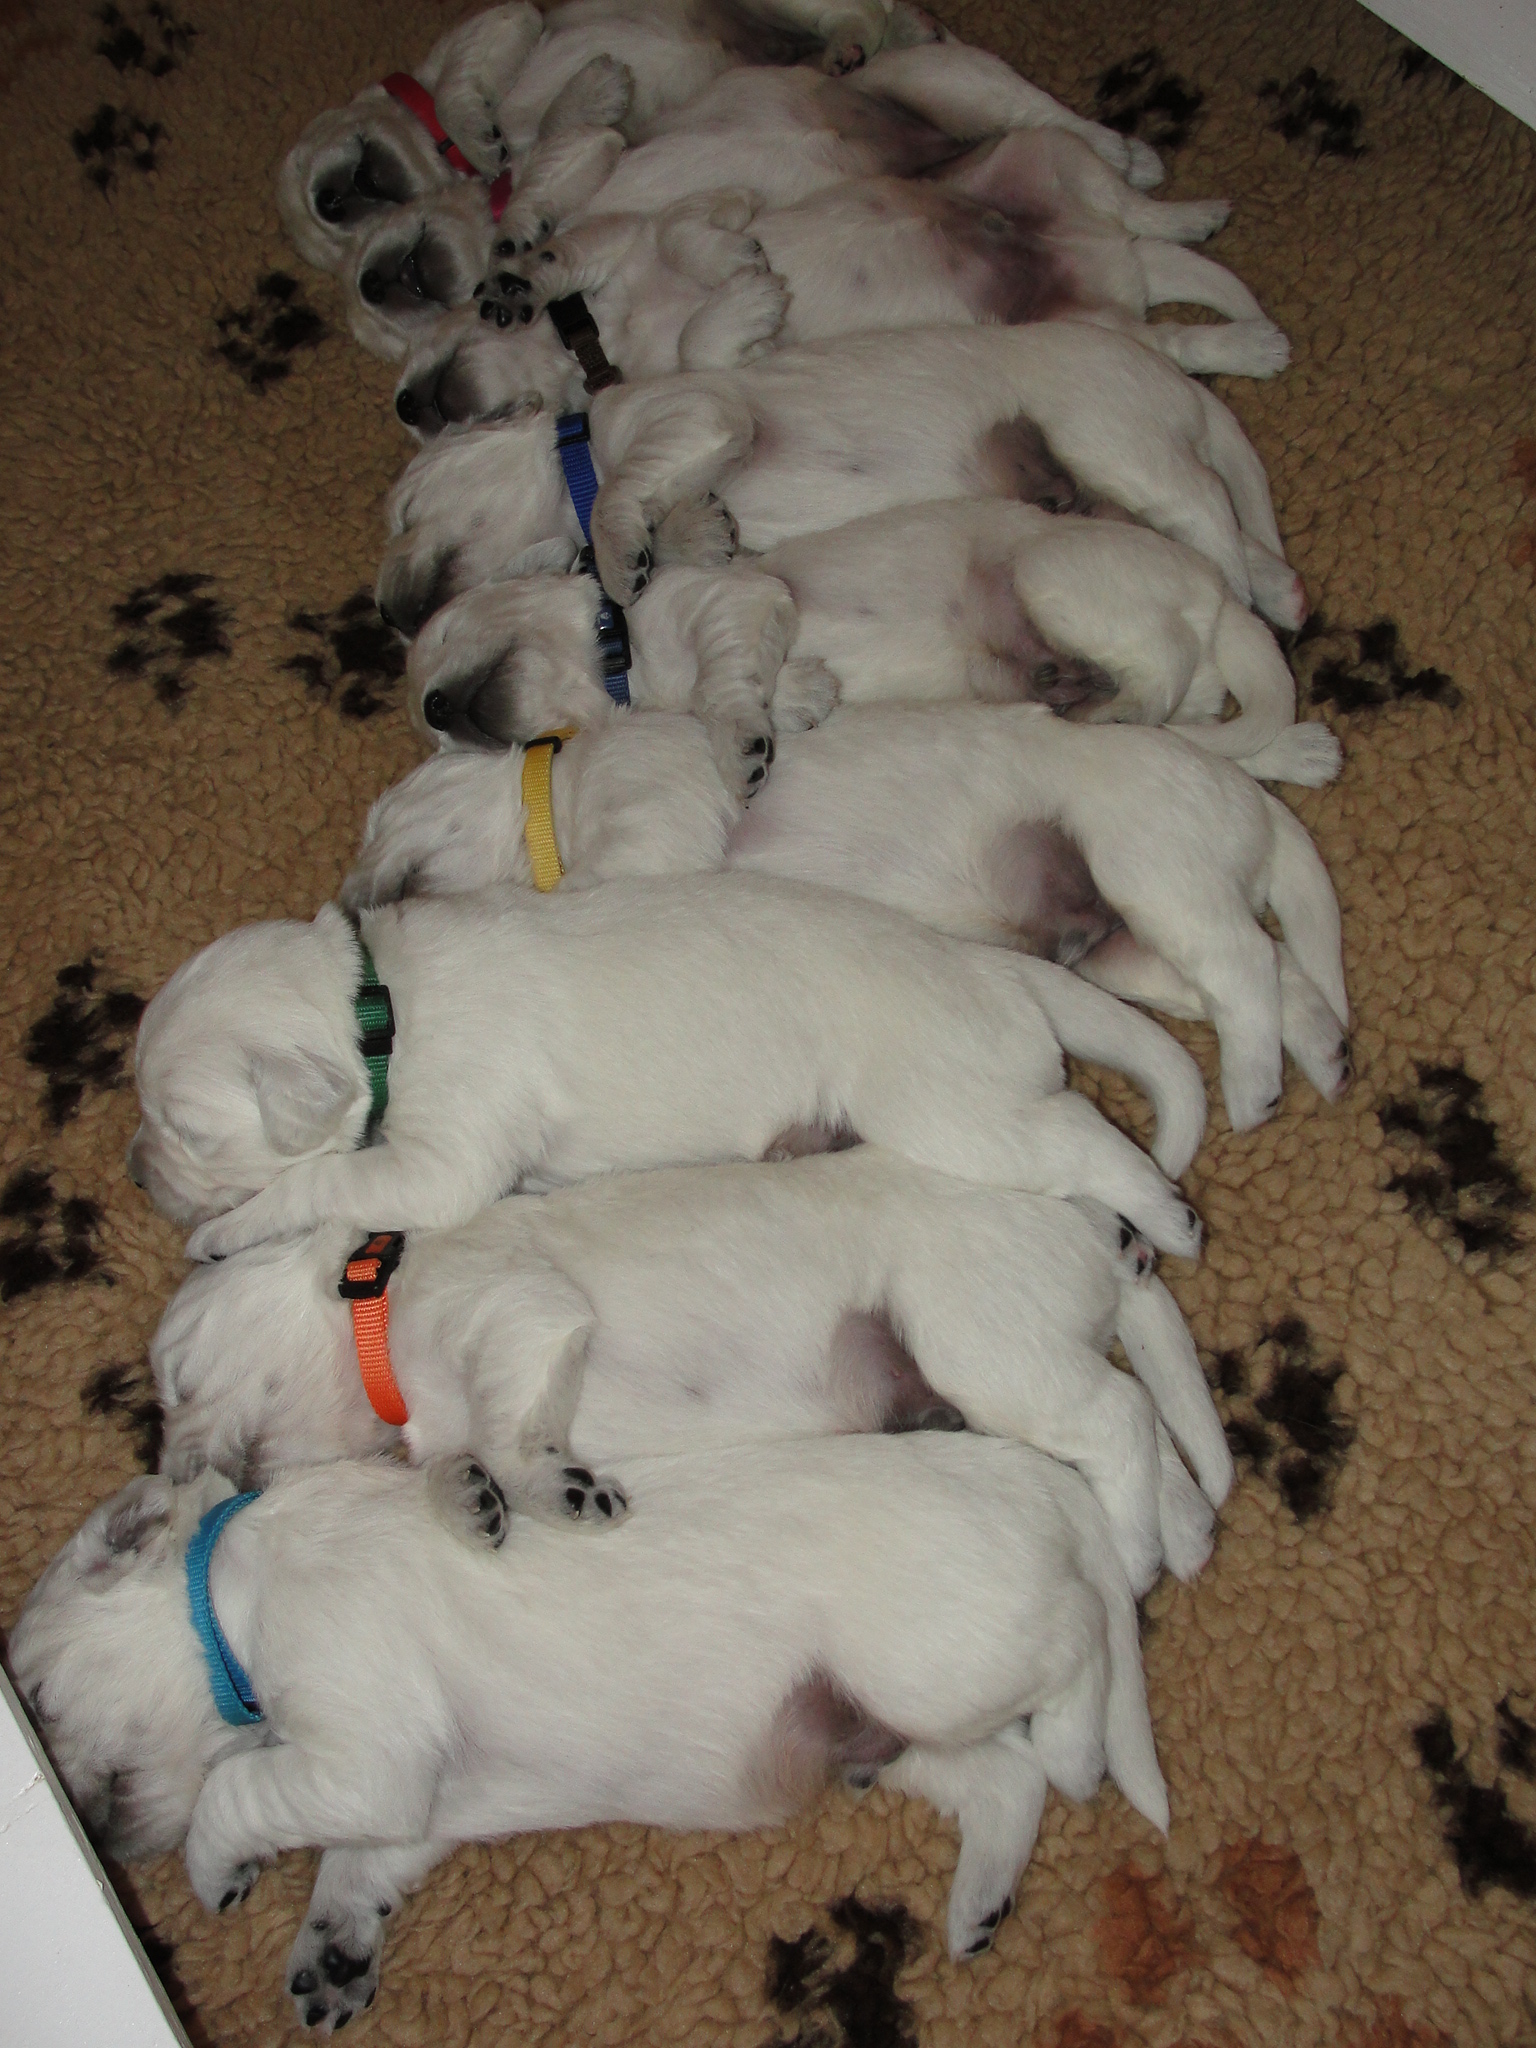 Puppies after a massage